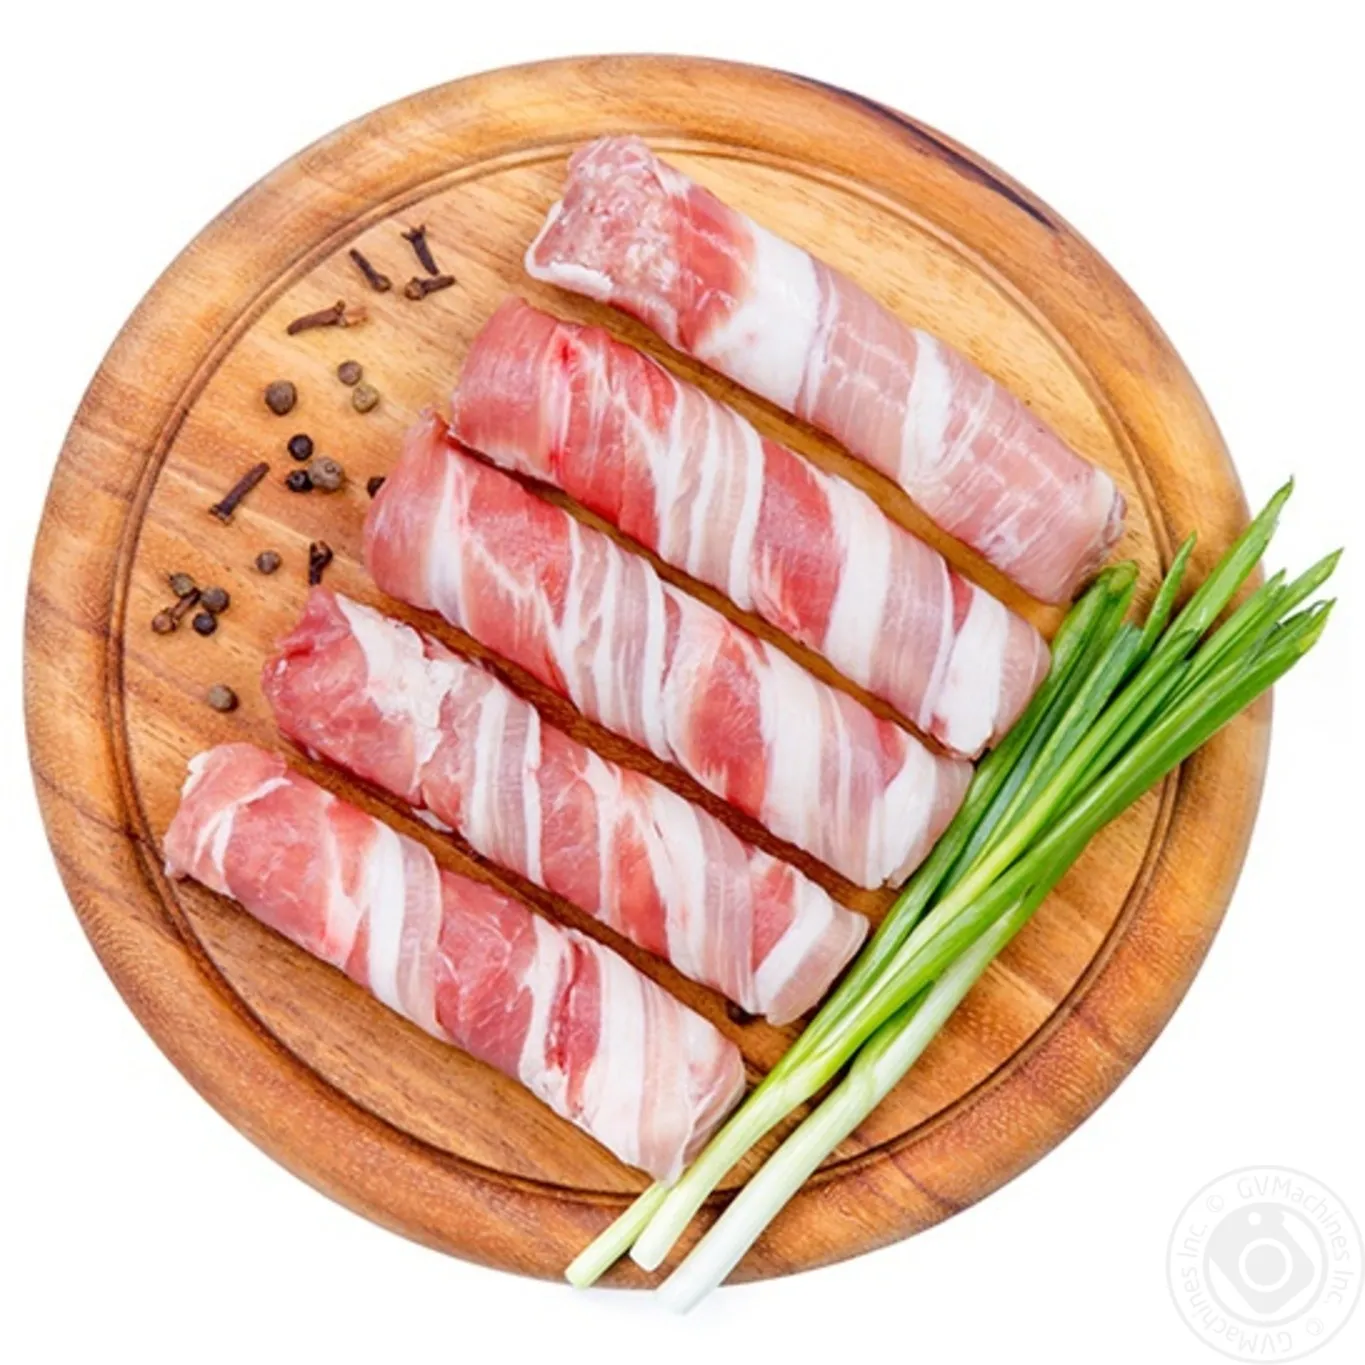 Chilled In Bacon Pork Chivapchychi